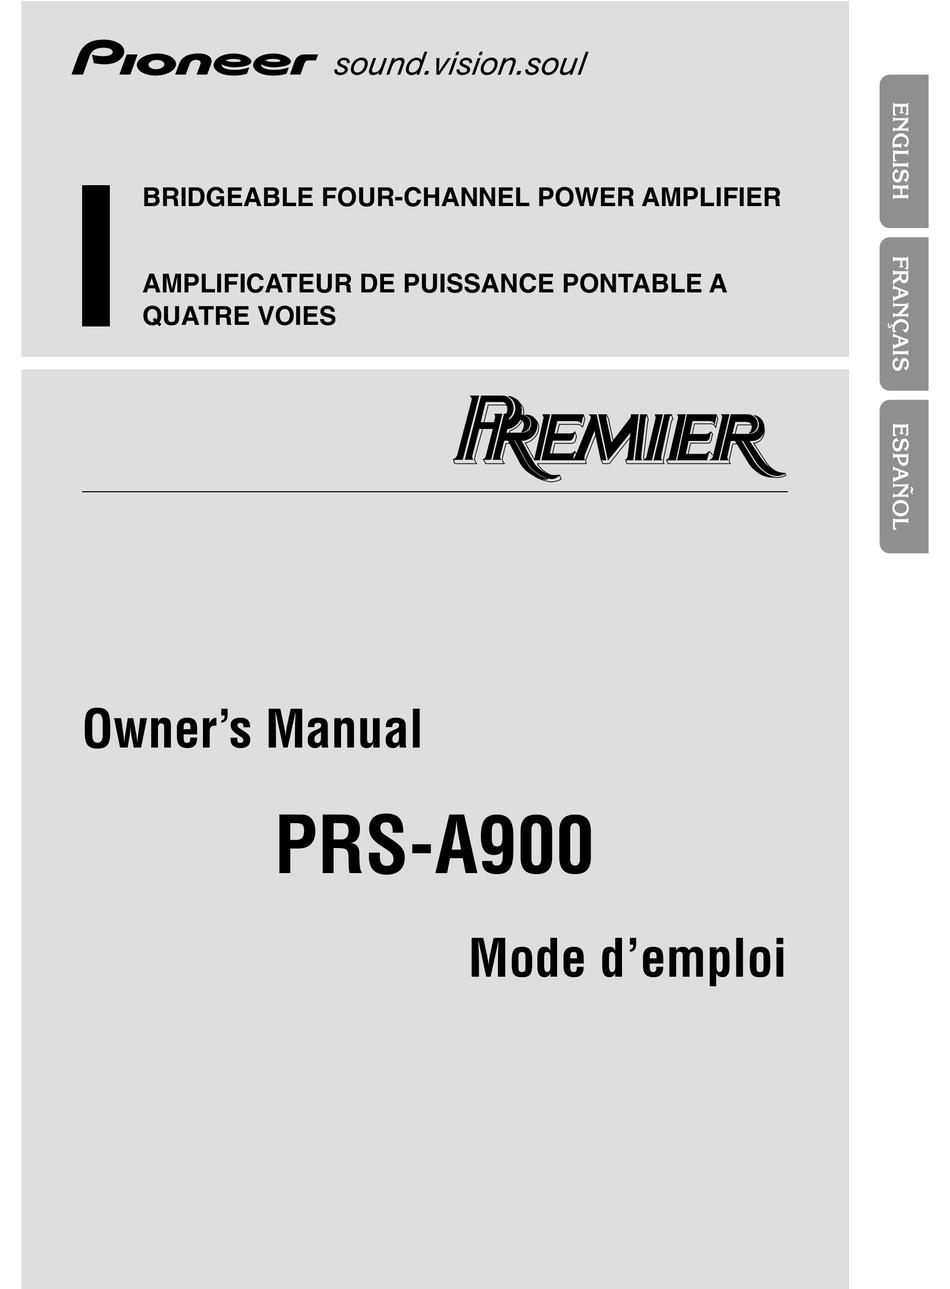 PIONEER PREMIER PRS-A900 OWNER'S MANUAL Pdf Download | ManualsLib